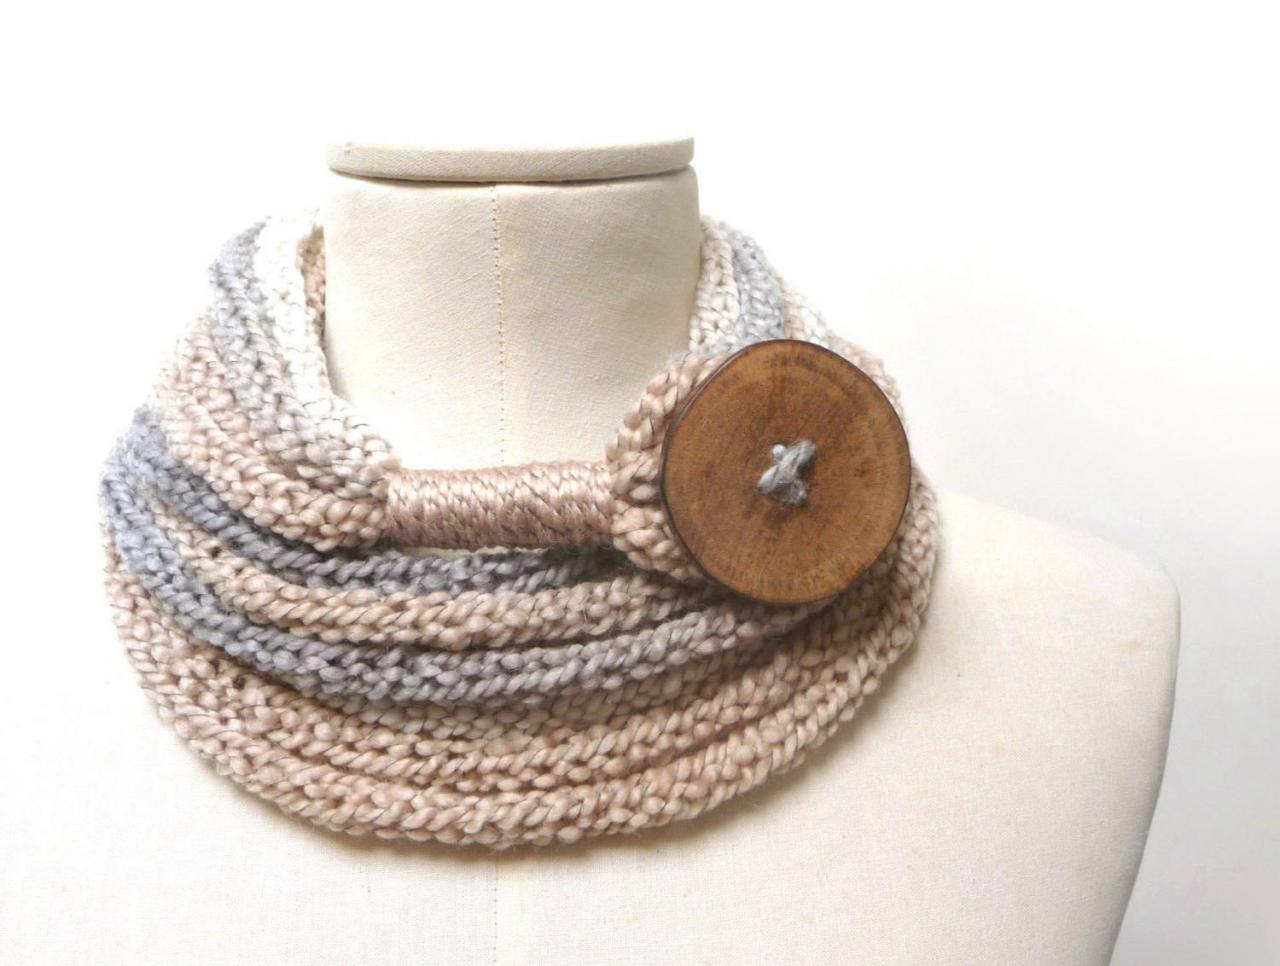 Knit Infinity Scarf Necklace, Loop Scarlette Neckwarmer - Cream, Beige, Grey Ombre Yarn With Big Wood Button - Handmade